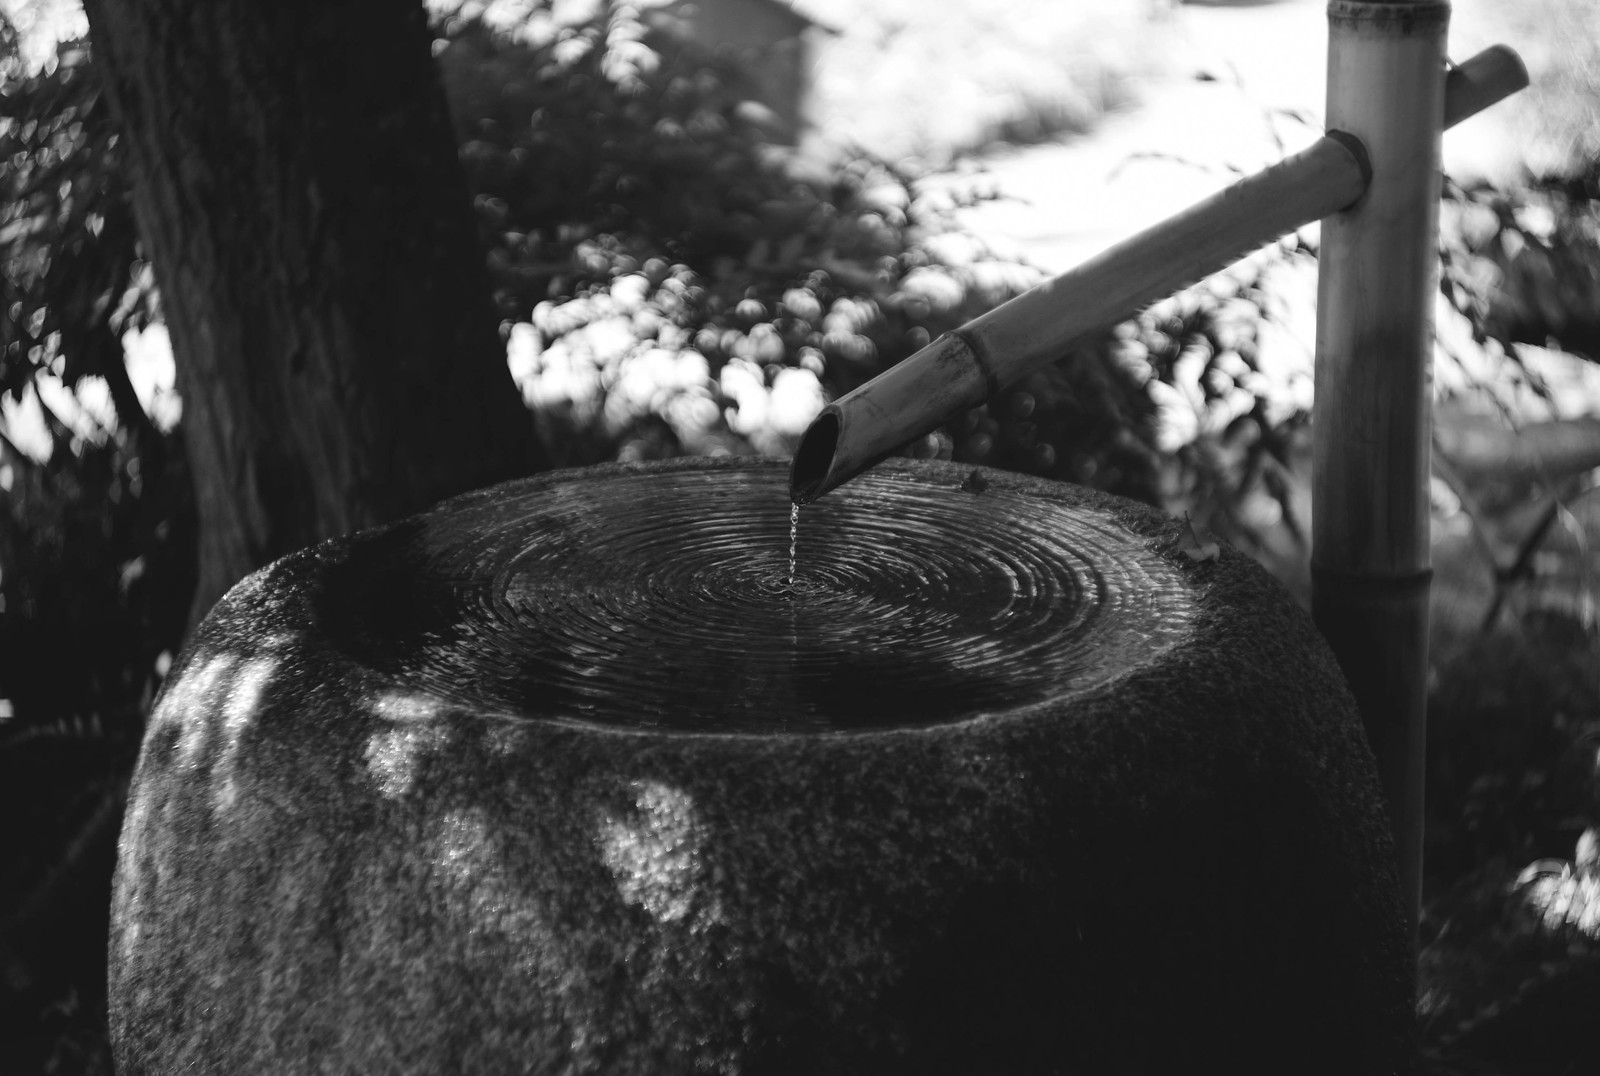 water jug